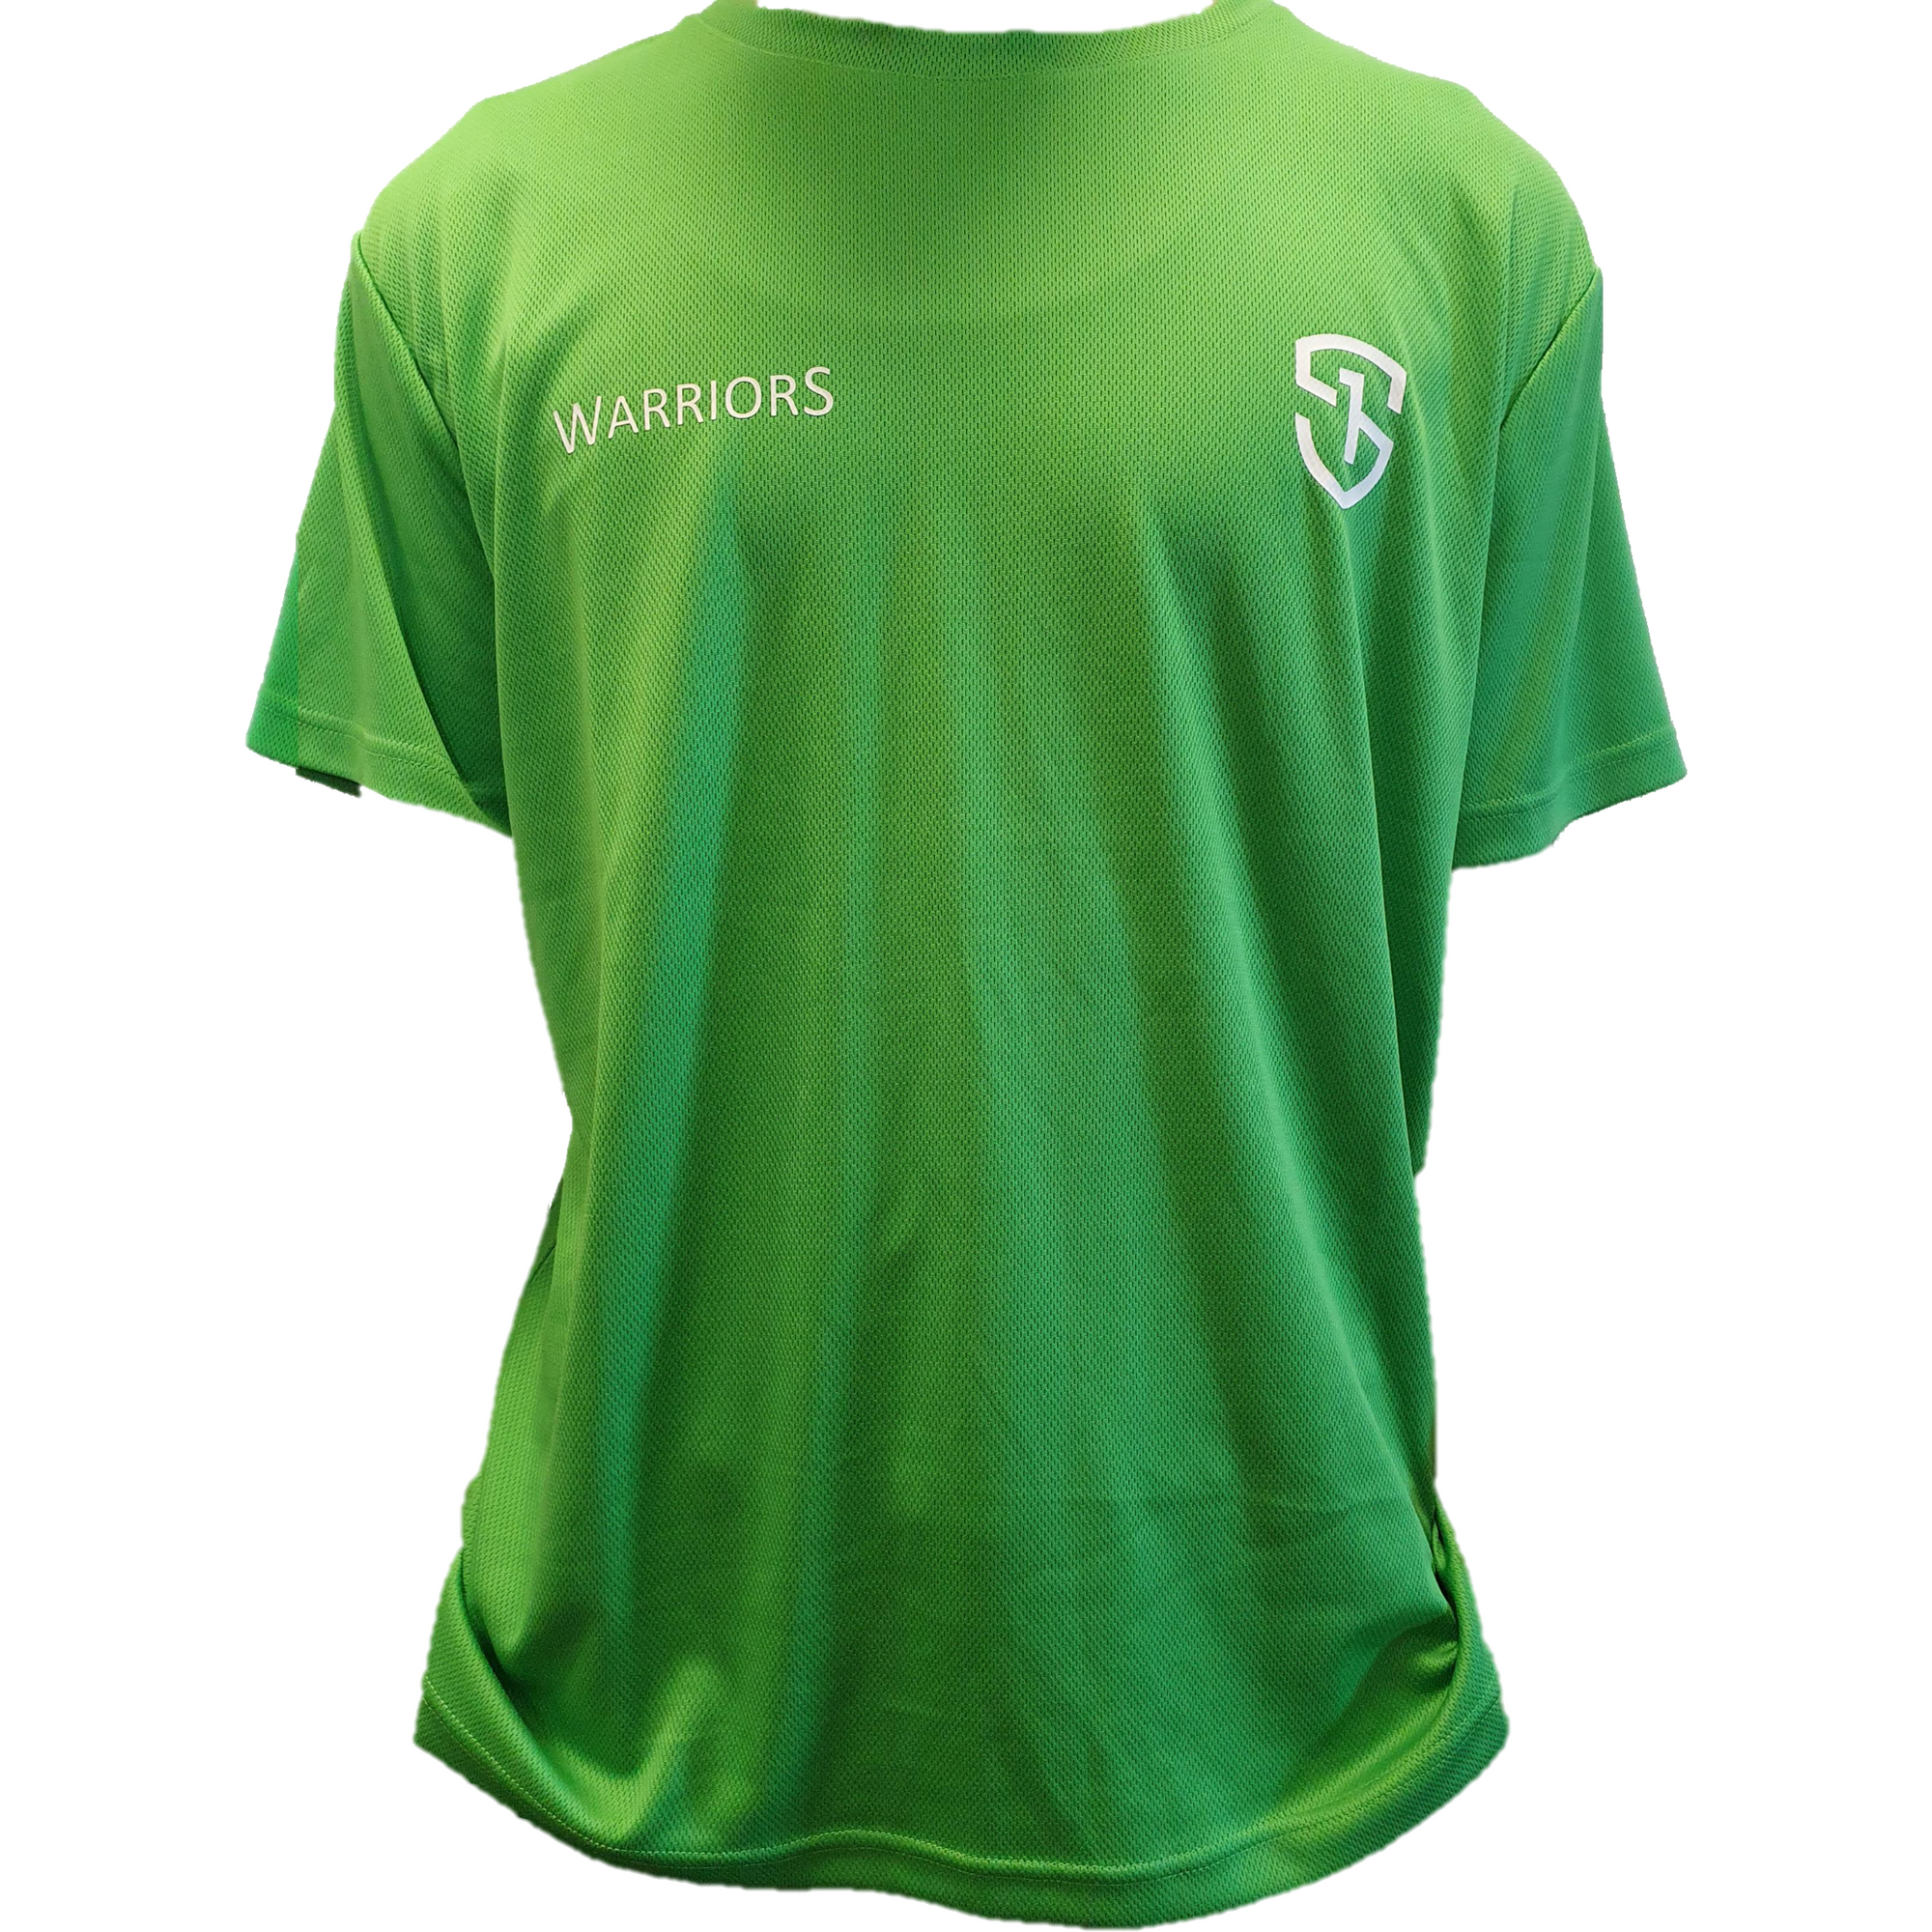 House Team Sports T-shirt Green Size 6